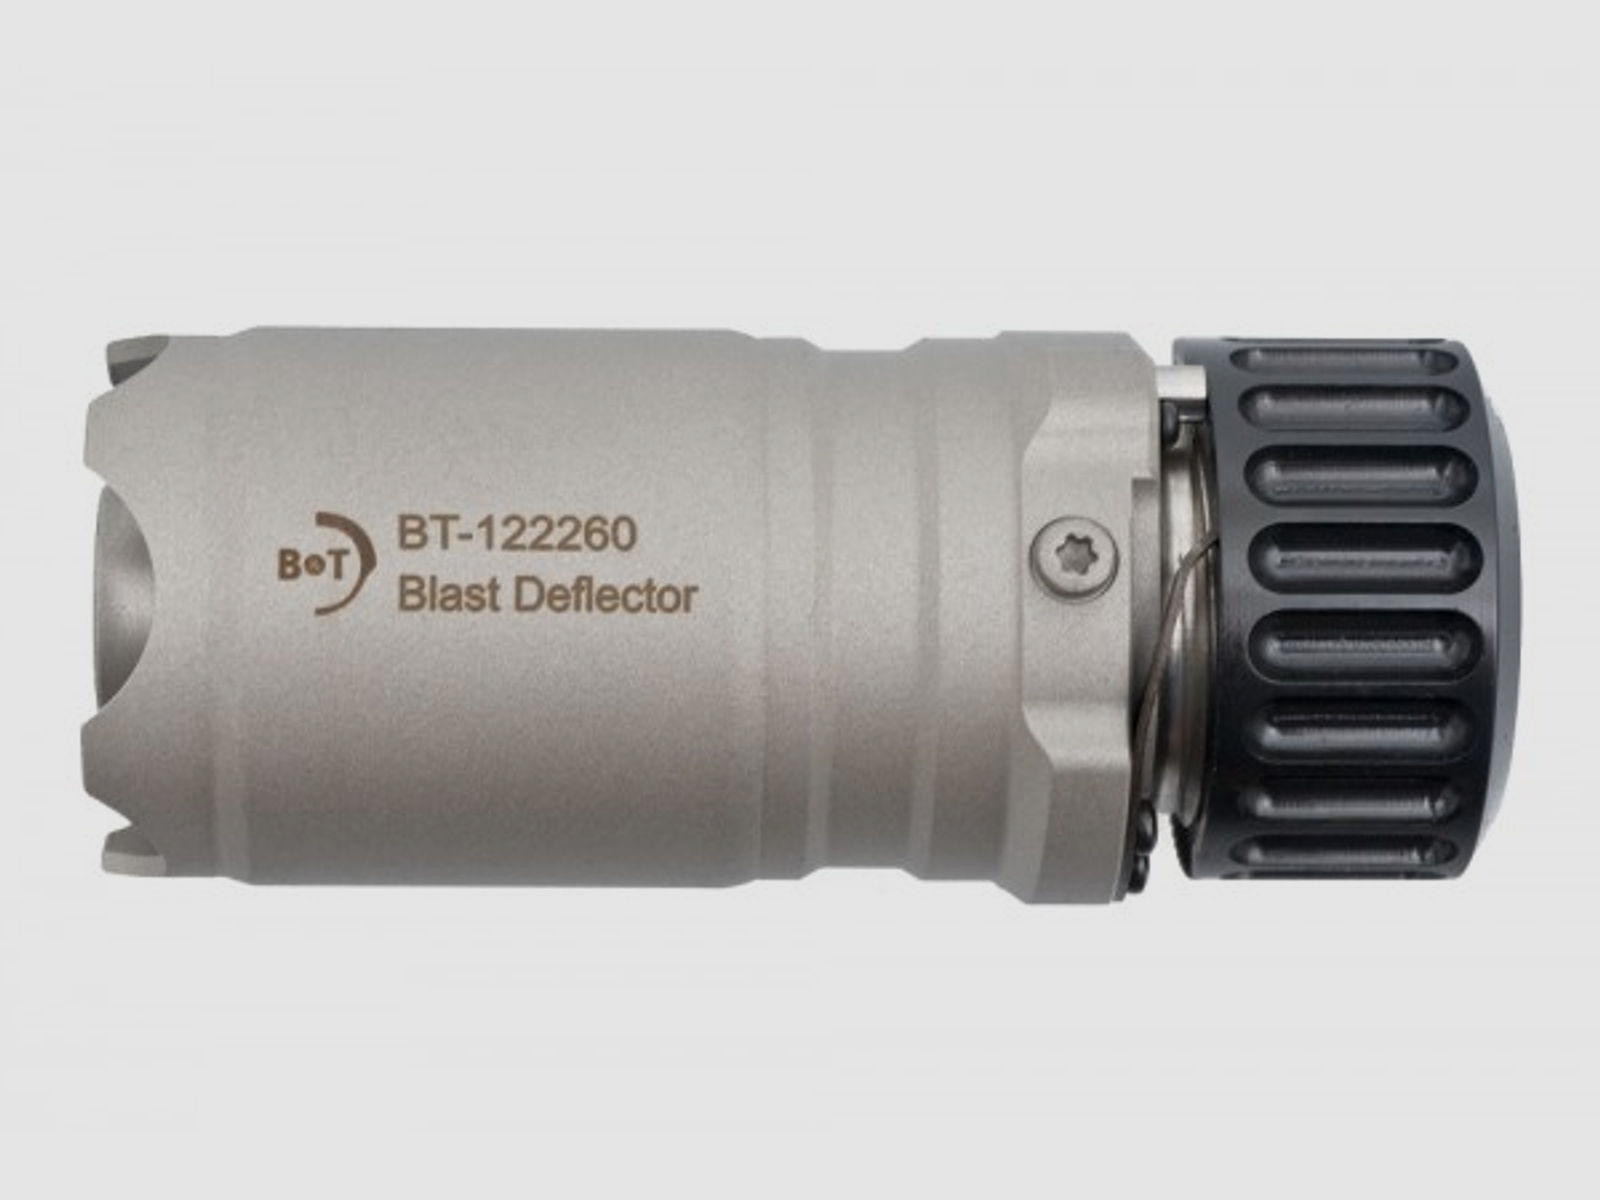 B&T Blast Deflector für Rotex-IIA